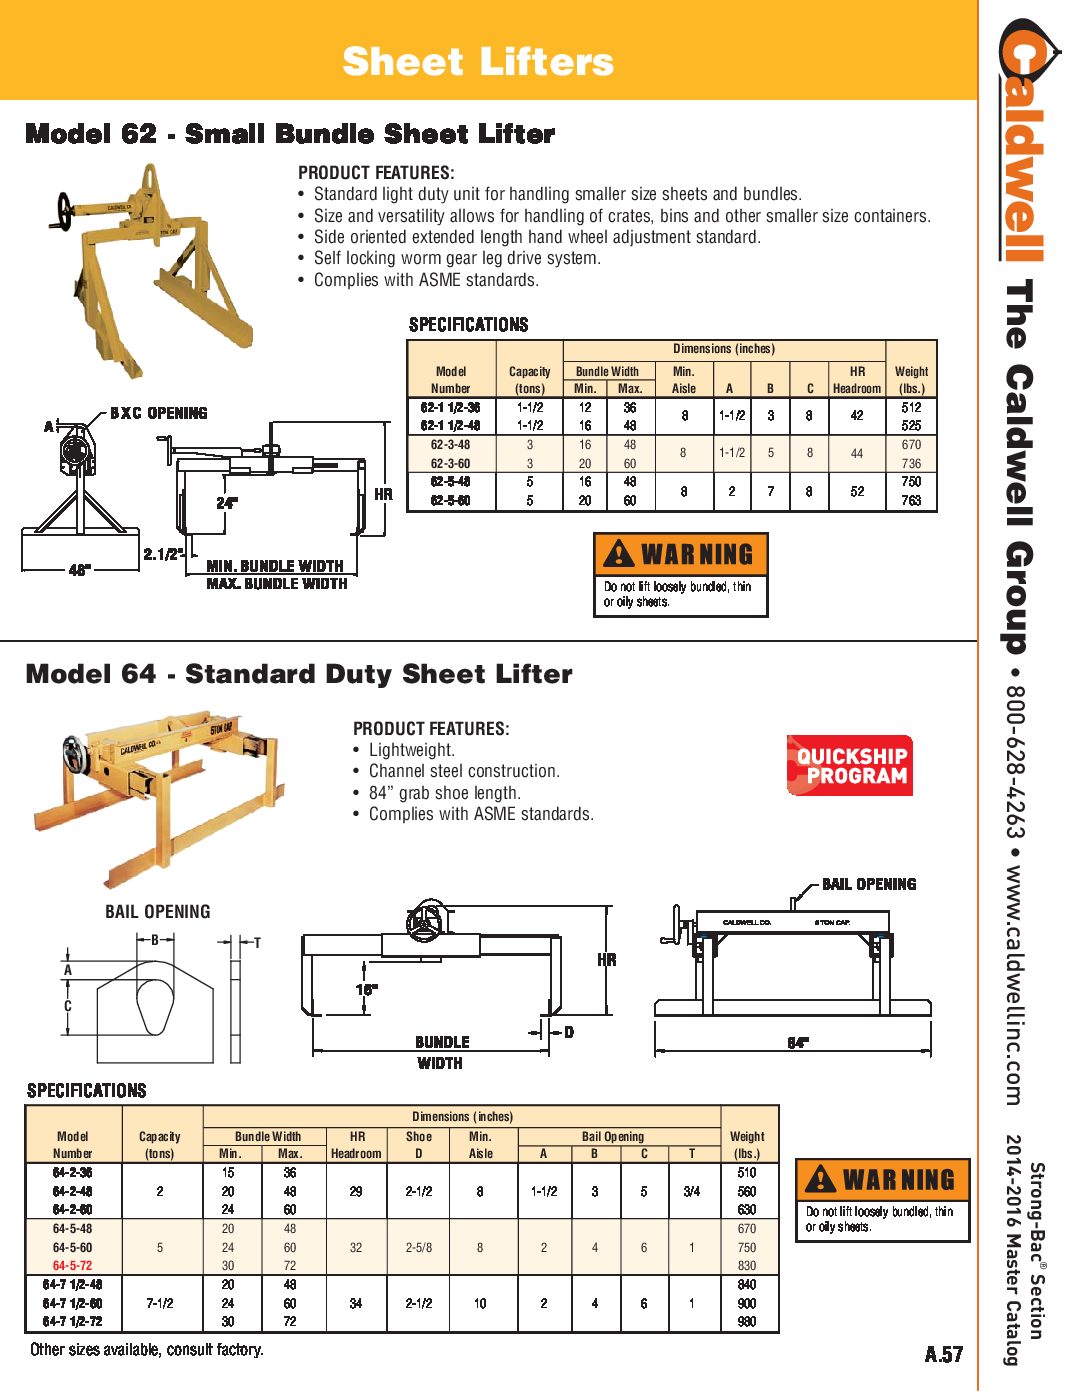 Caldwell STRONG BAC Small Bundle Sheet Lifter Spread Sheet pdf